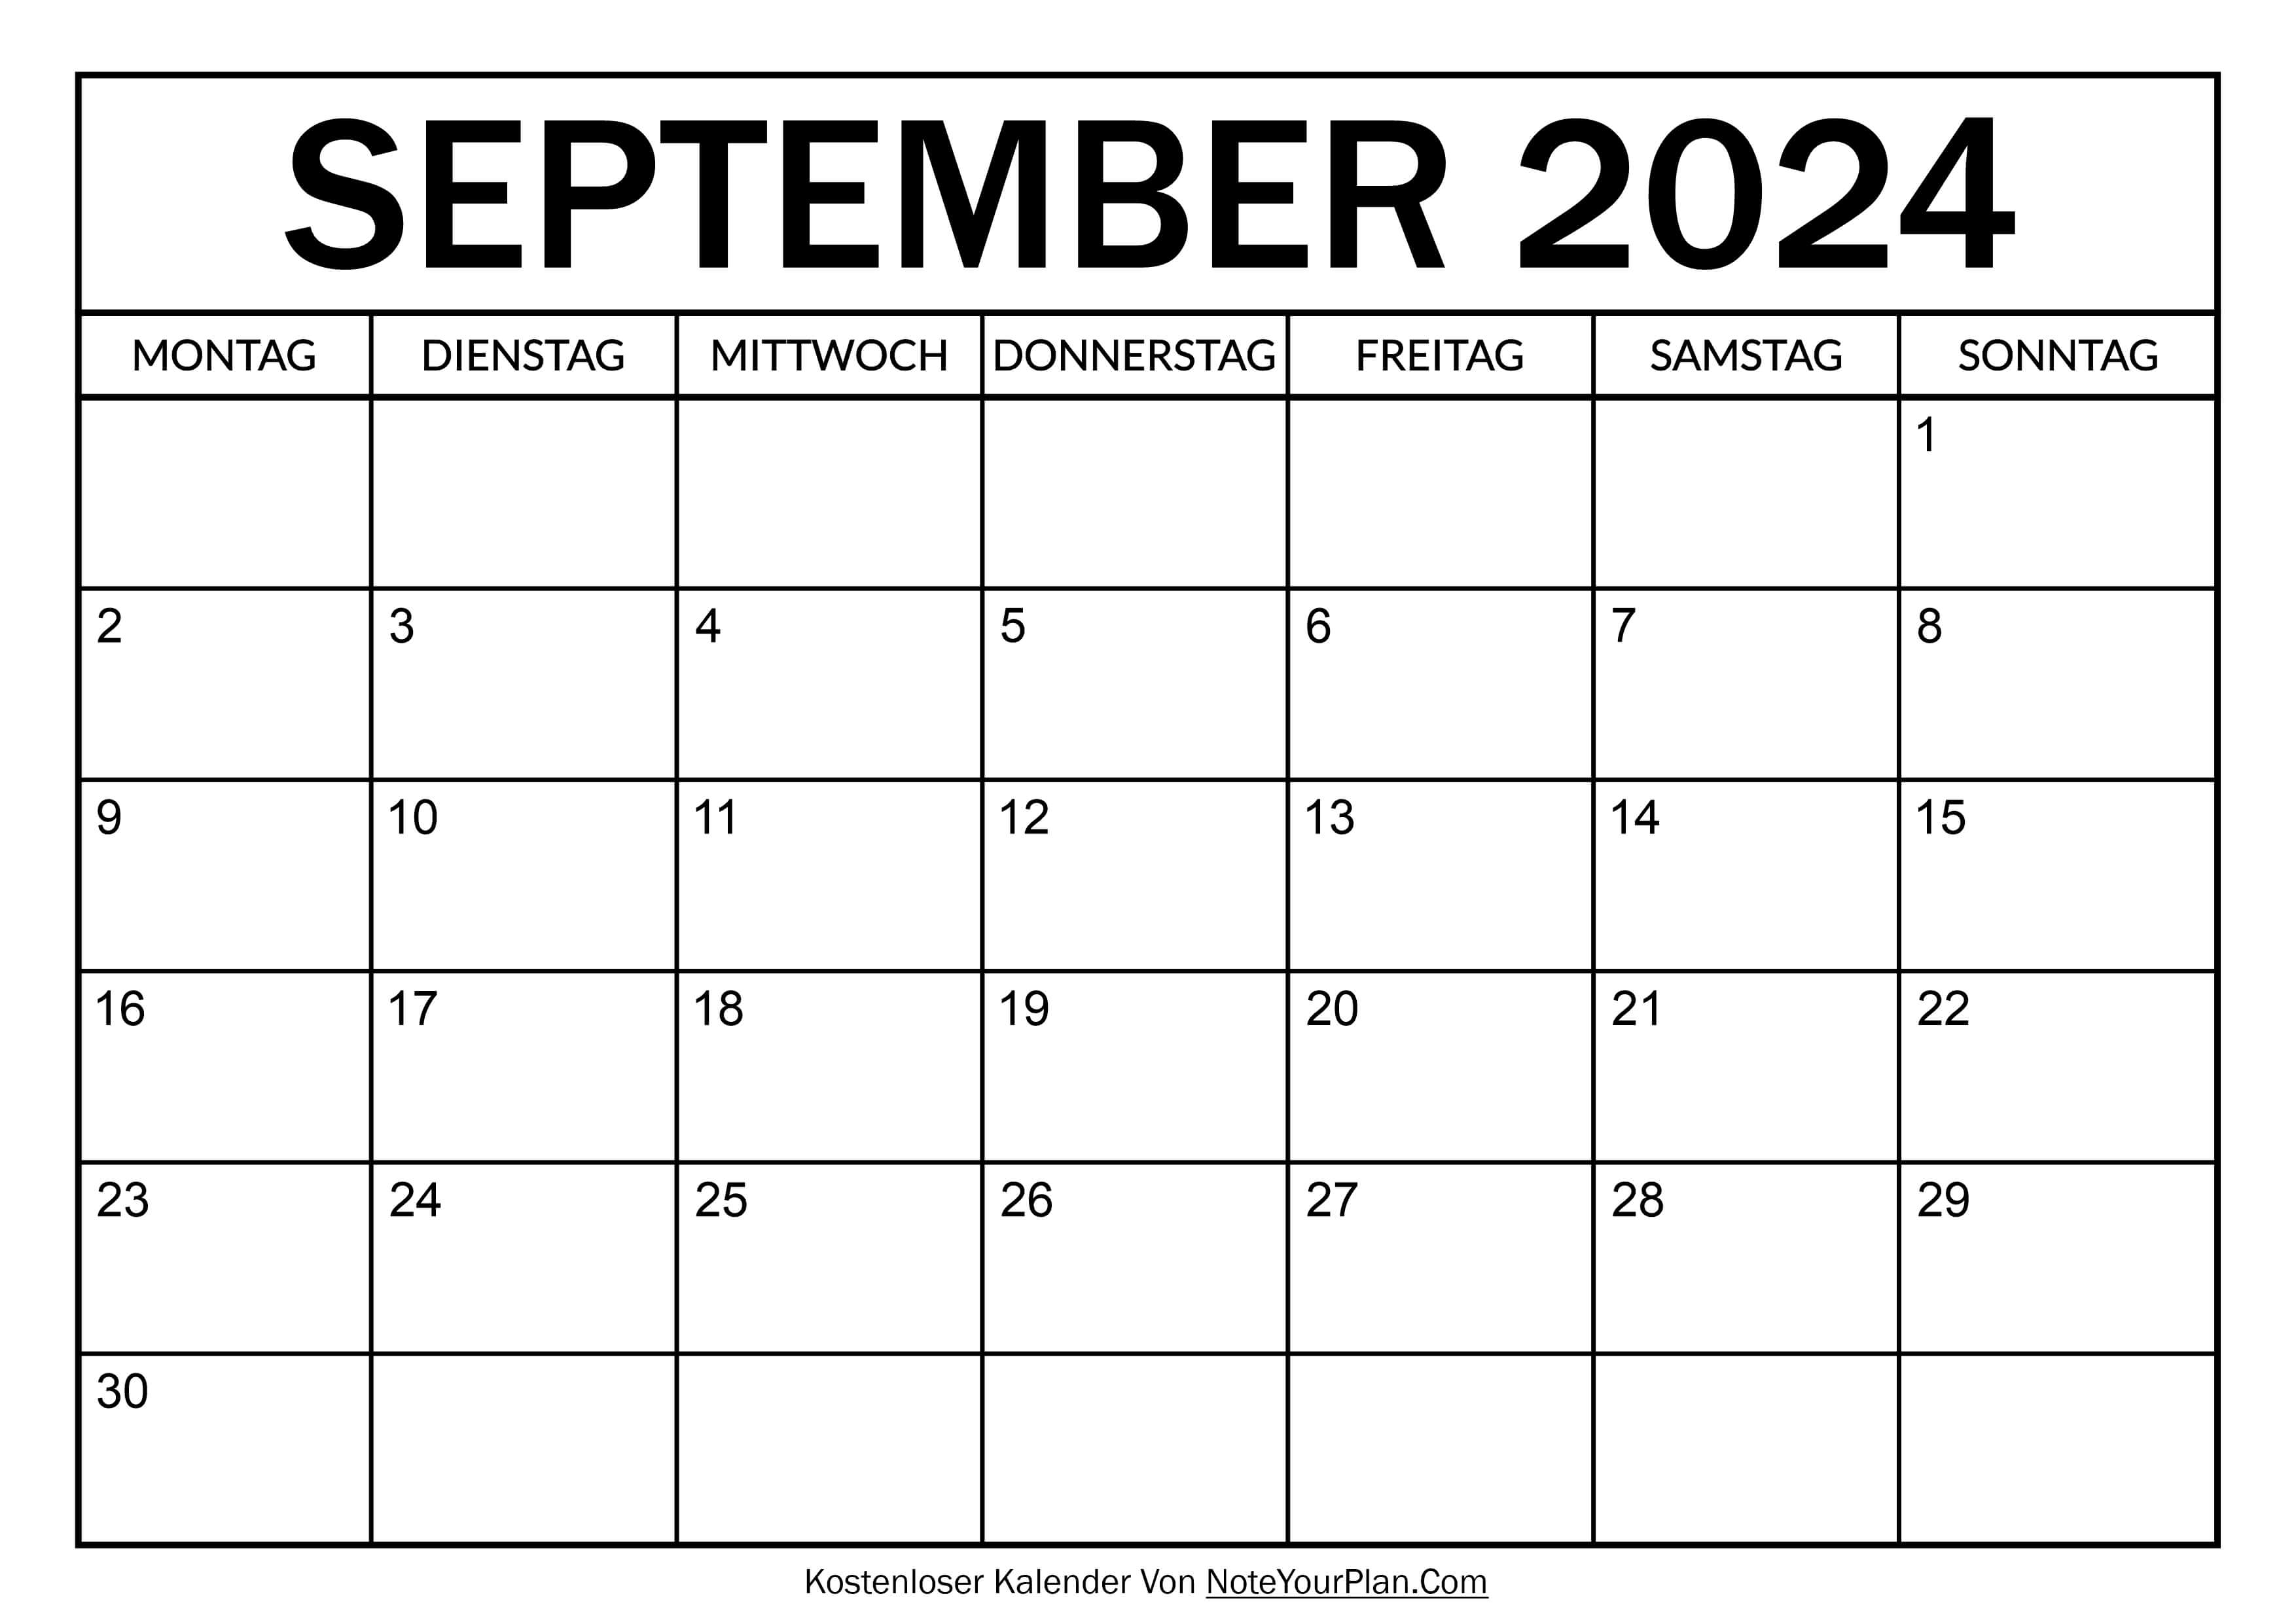 Kalender für September 2024